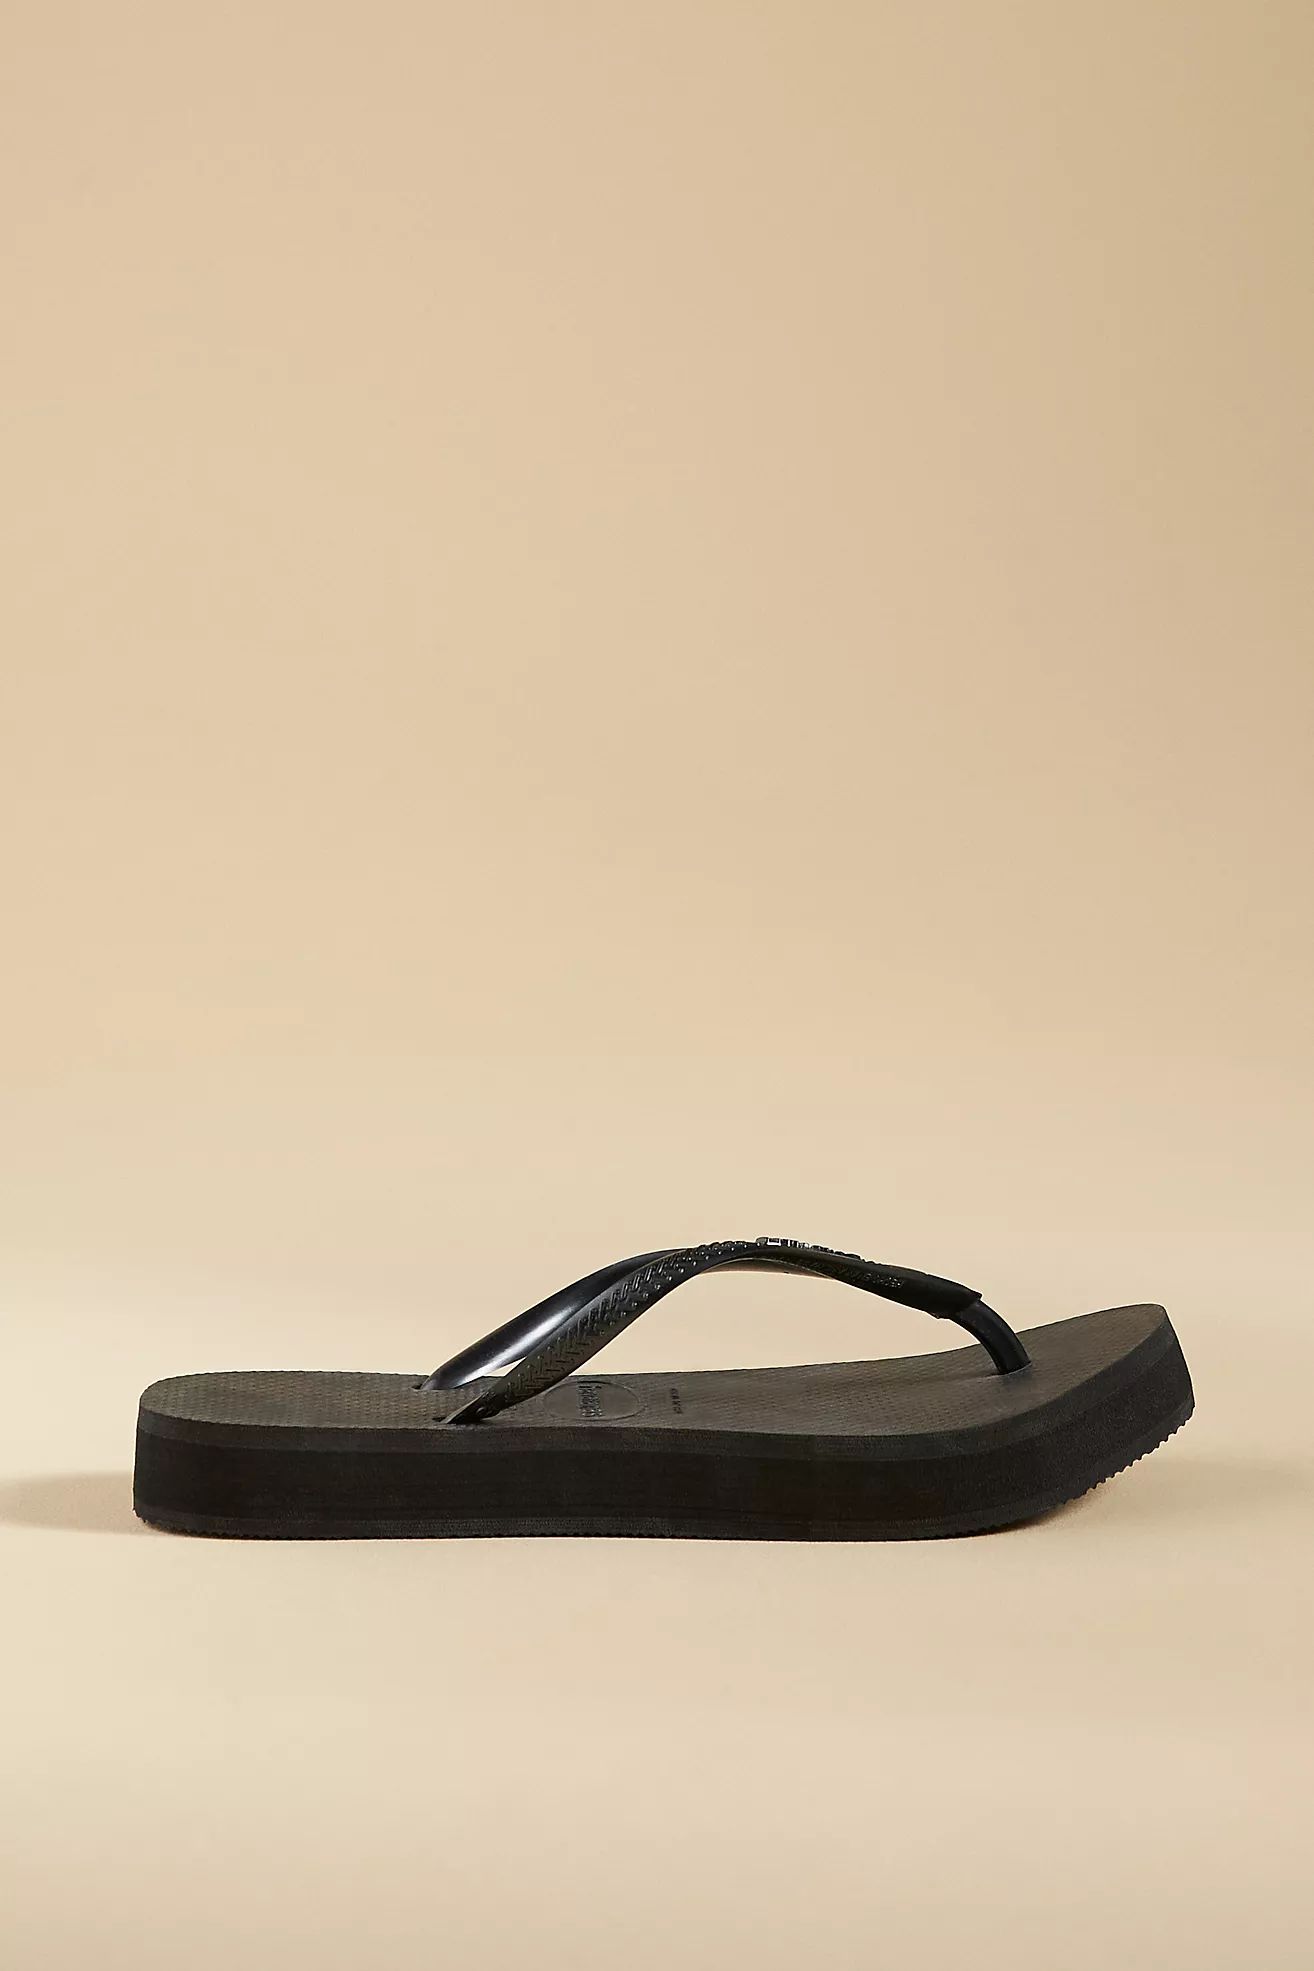 Havaianas Slim Flatform Thong Sandals | Anthropologie (US)